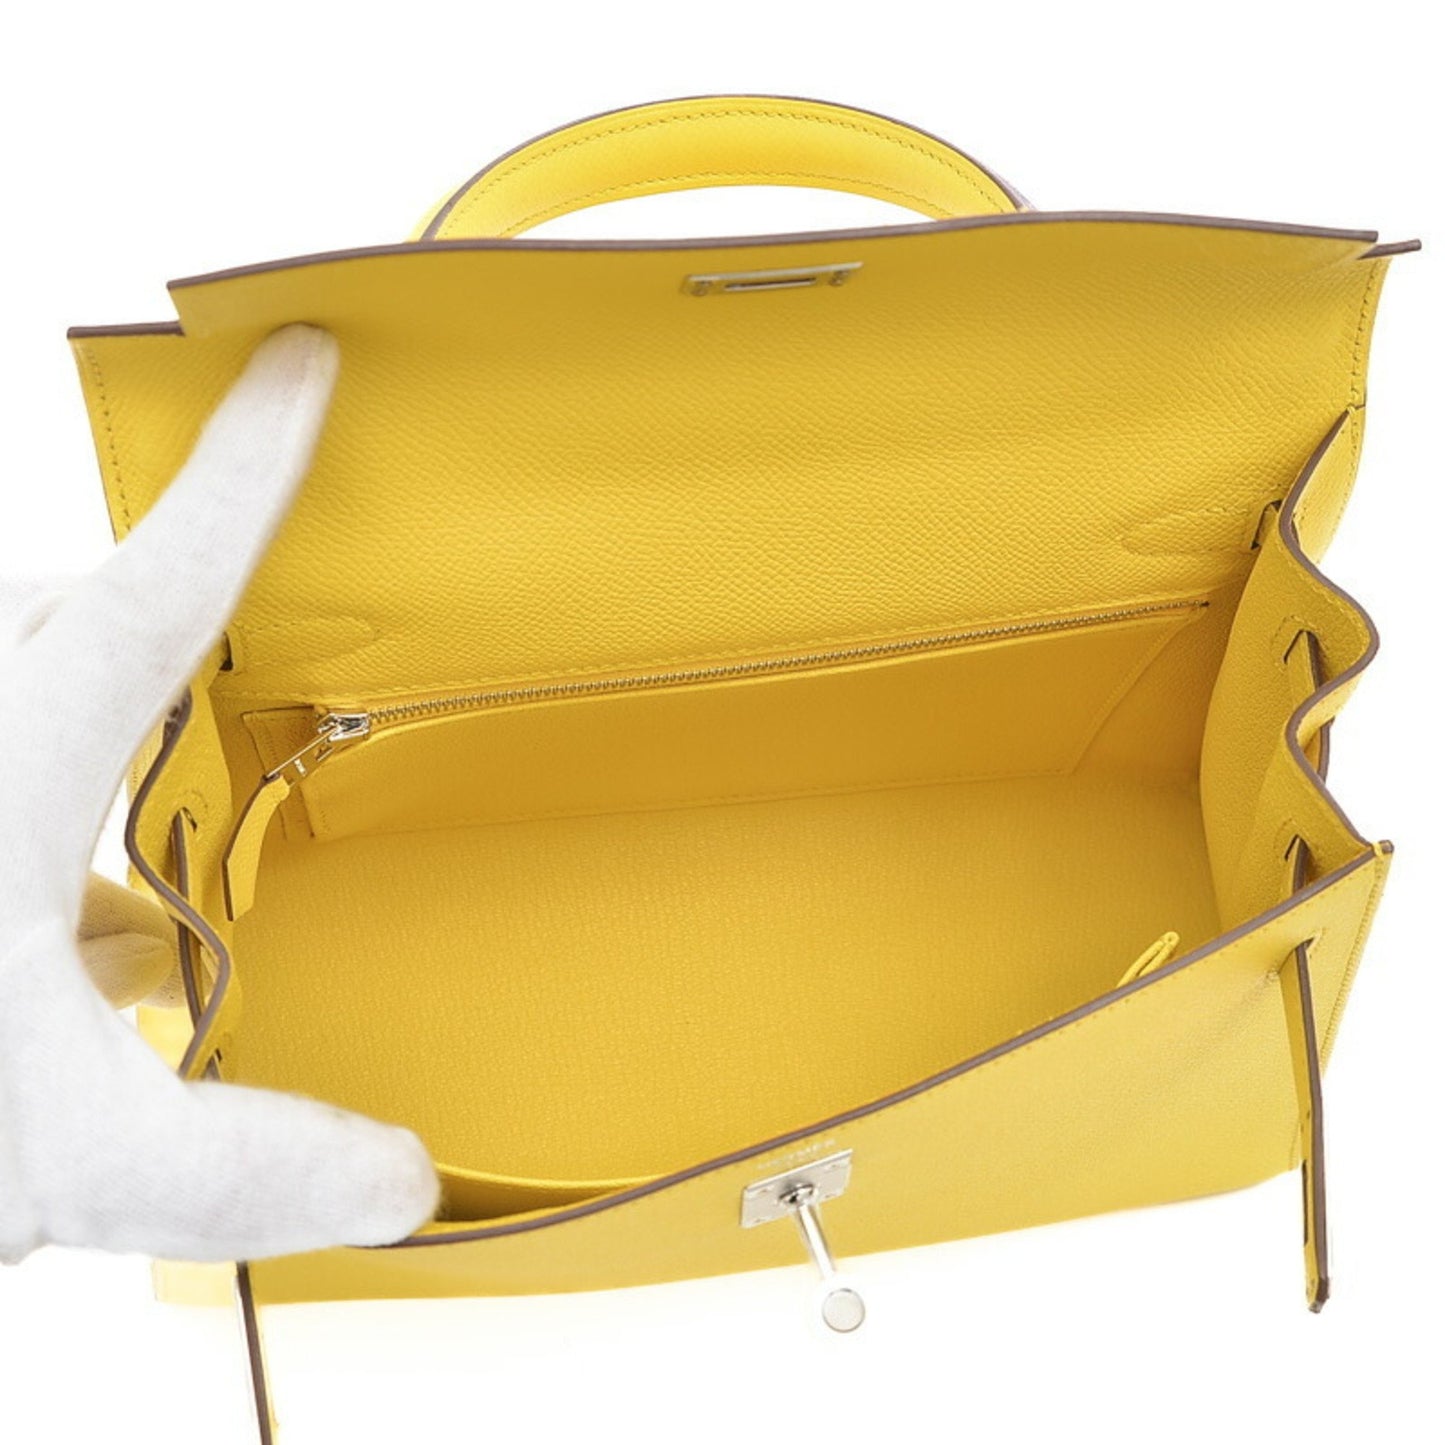 Hermes Women's Elegant Hermes Kelly 25 Handbag in Yellow Leather in Yellow